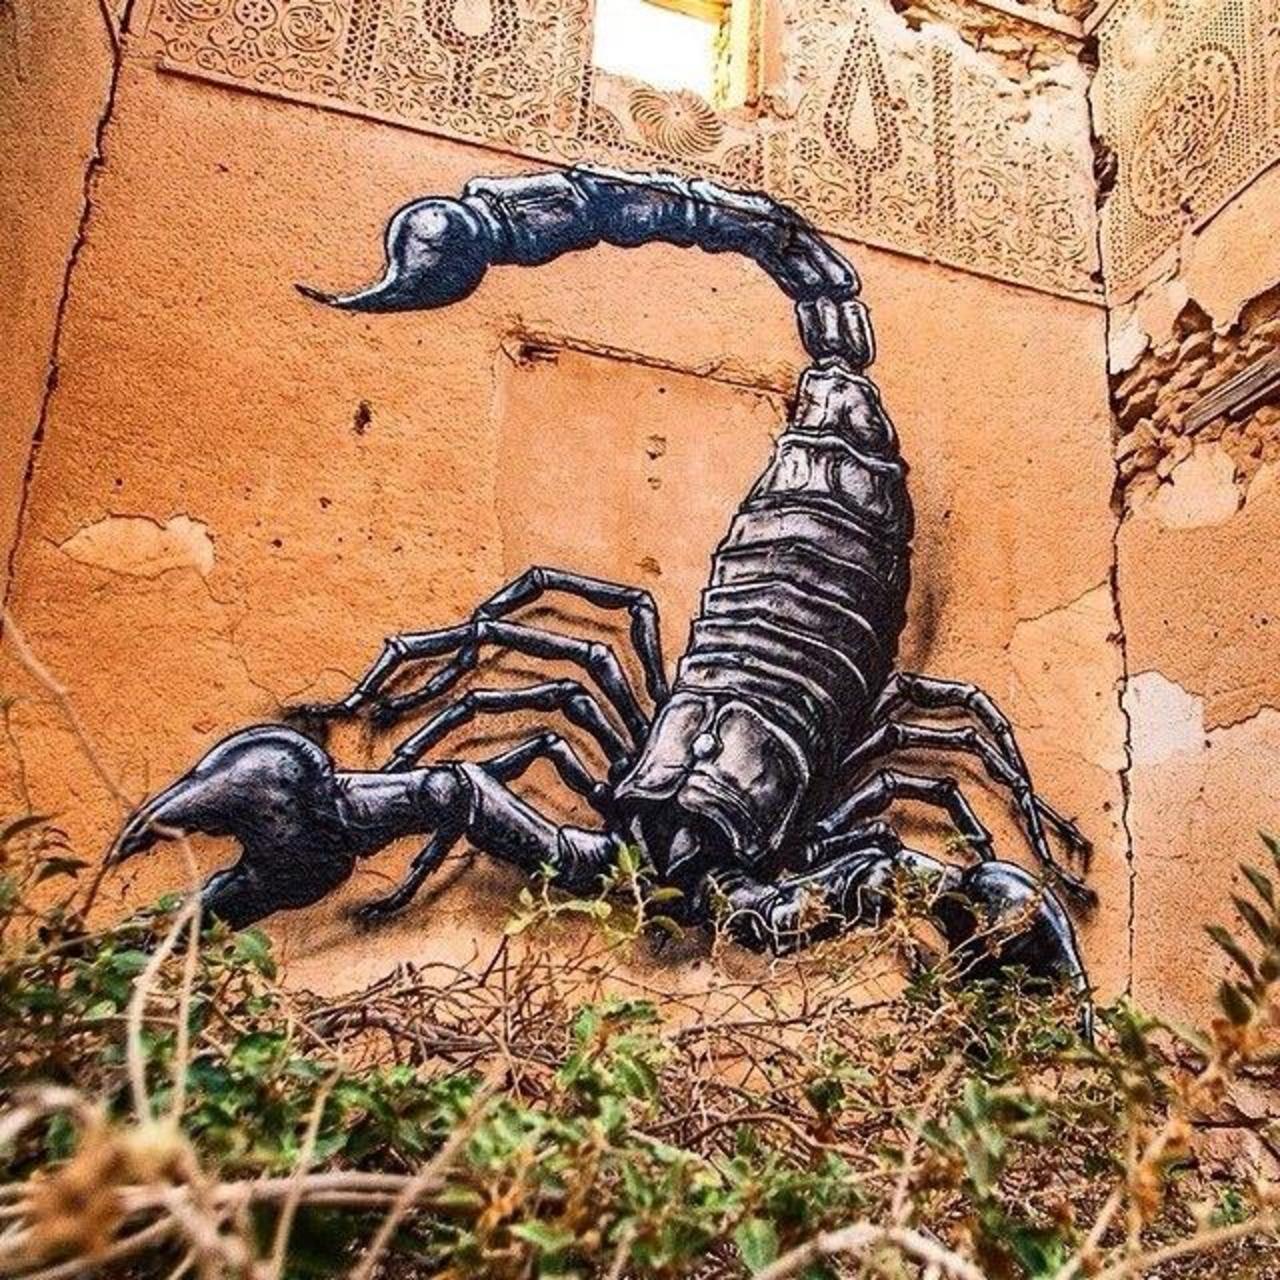 Artist ROA new Scorpion Street Art mural in Djerba, Tunisia #art #graffiti #nature #streetart https://t.co/Ktsa2ud4Ro